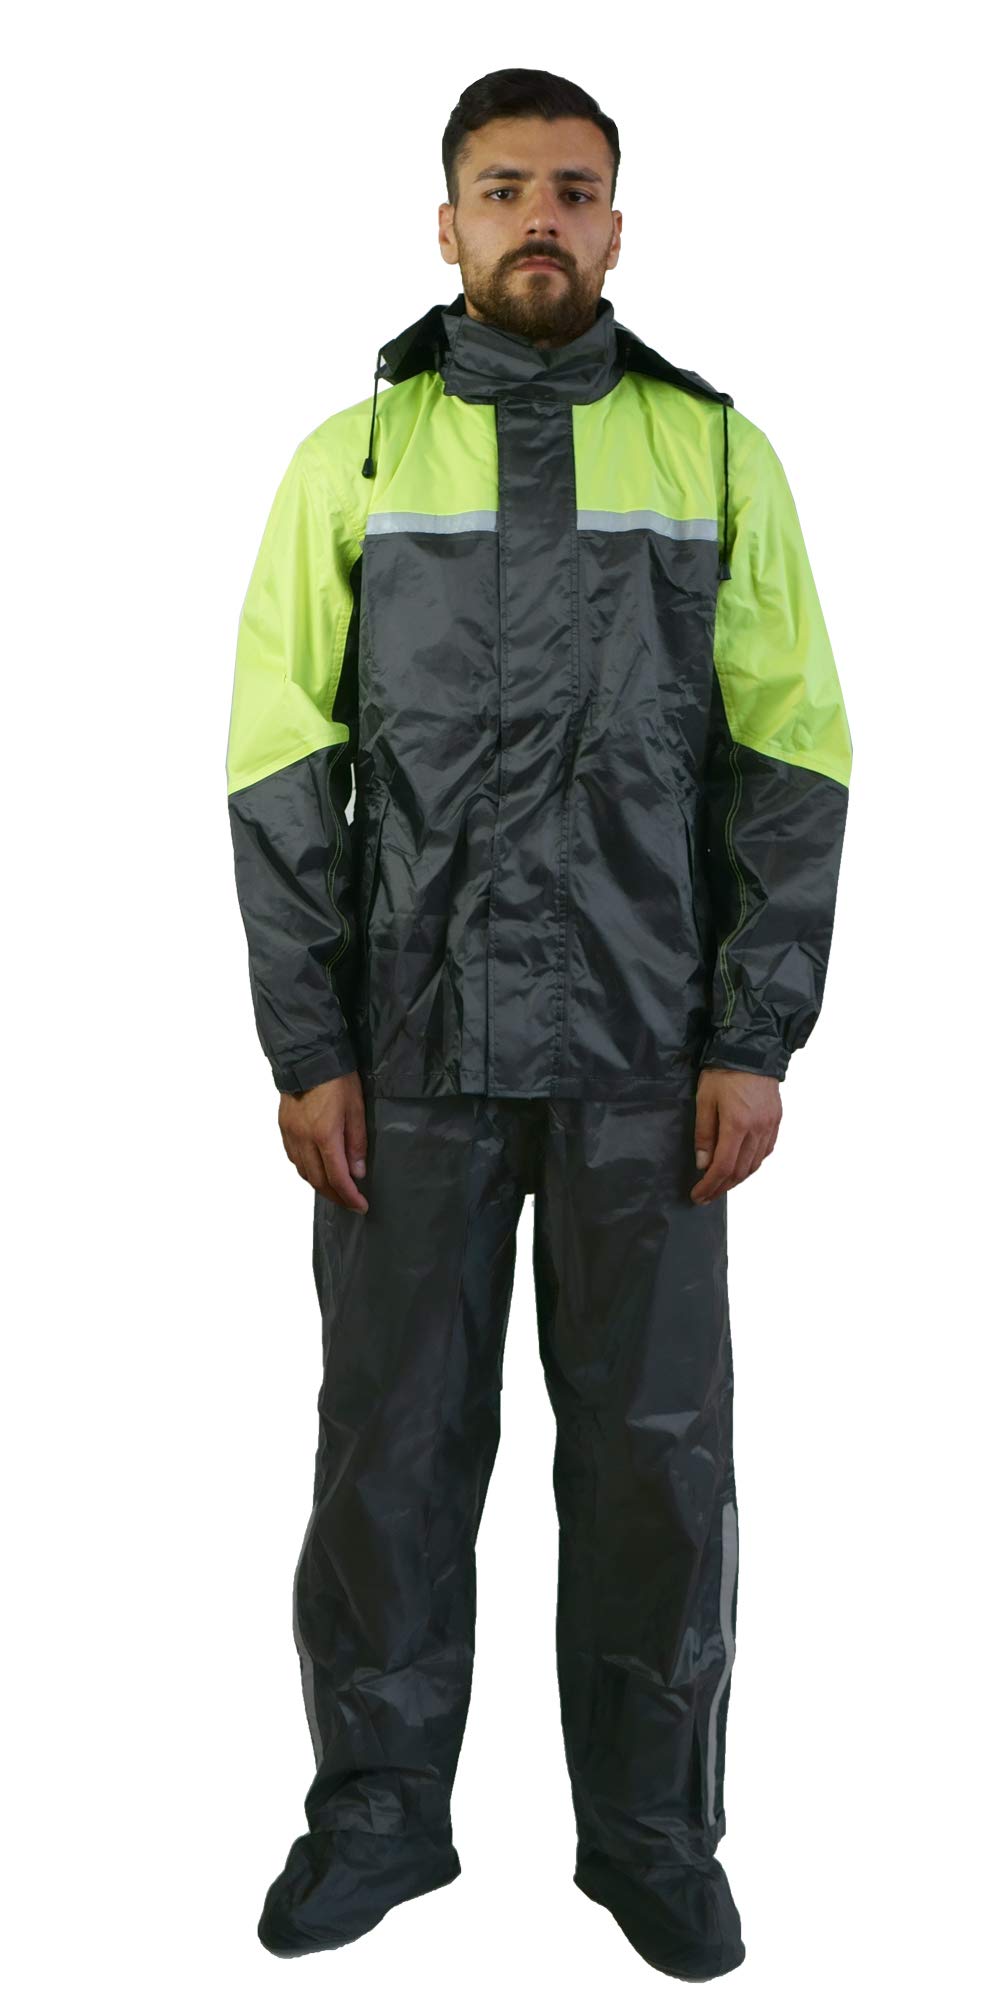 TJ MARVIN Regenschutz Set (Jacke, Hose, Stiefelbezug und Rucksäcke) CLASSICO E31 S Nero Giallo fluo von TJ MARVIN